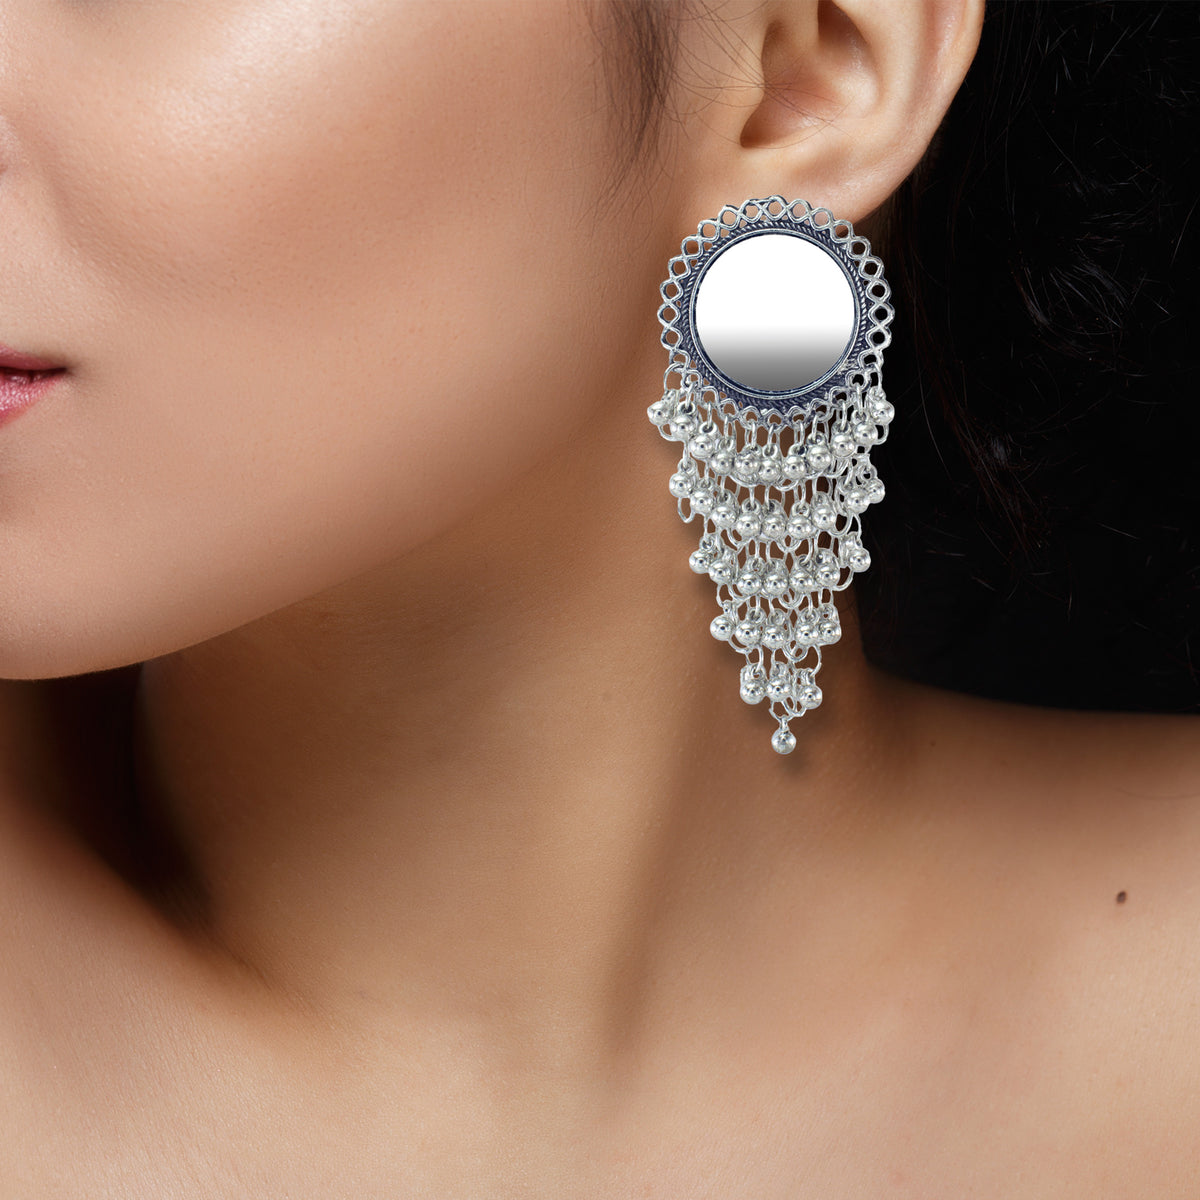 Abhinn Stylish German Silver Afghani Jhalar Earrings for Women